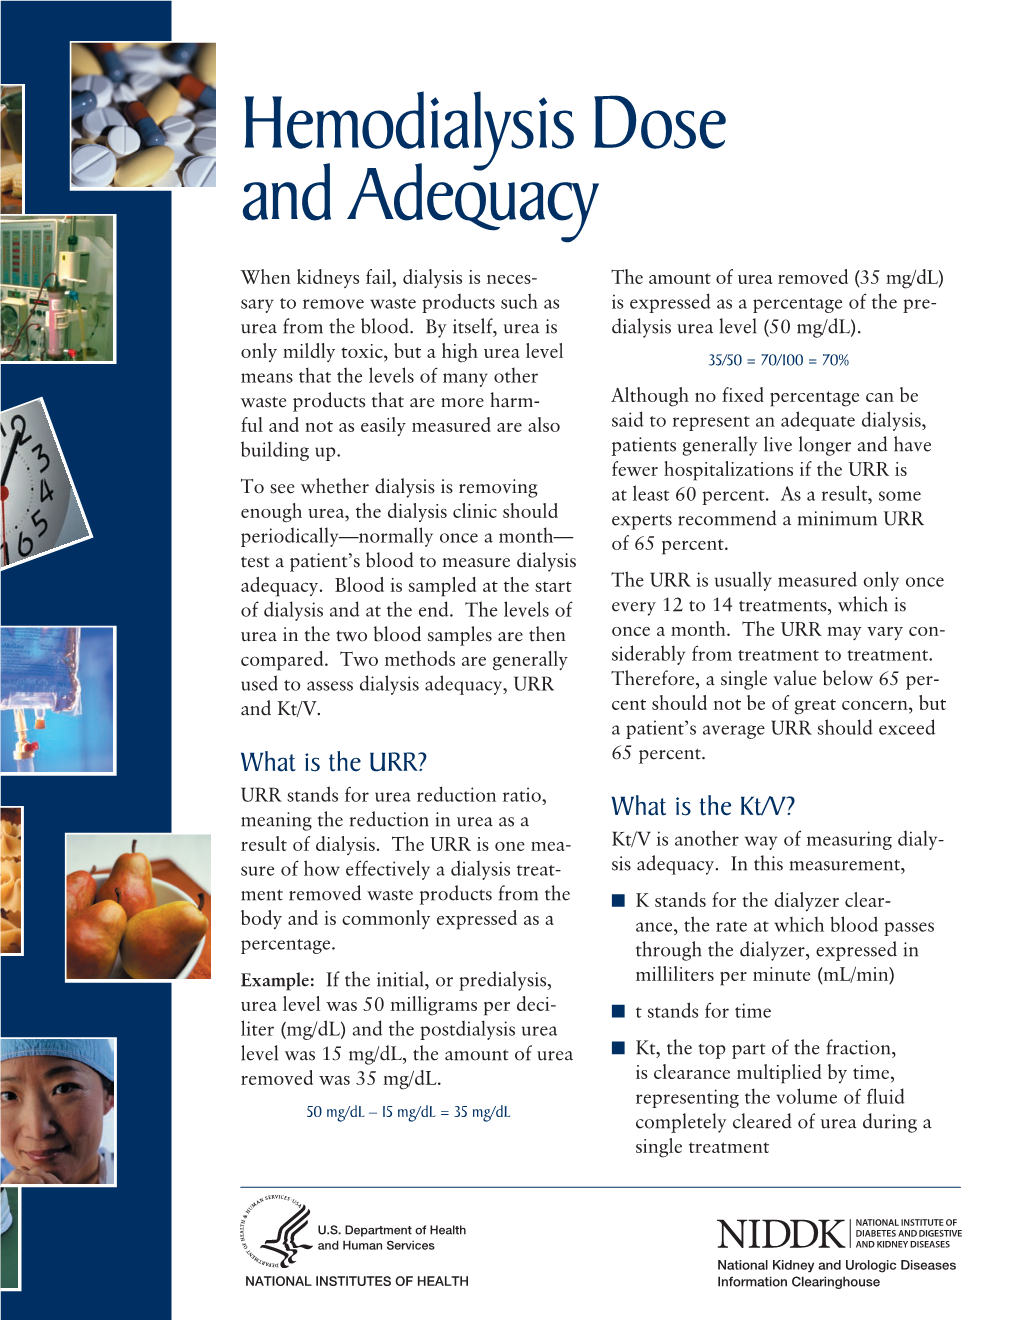 Hemodialysis Dose and Adequacy